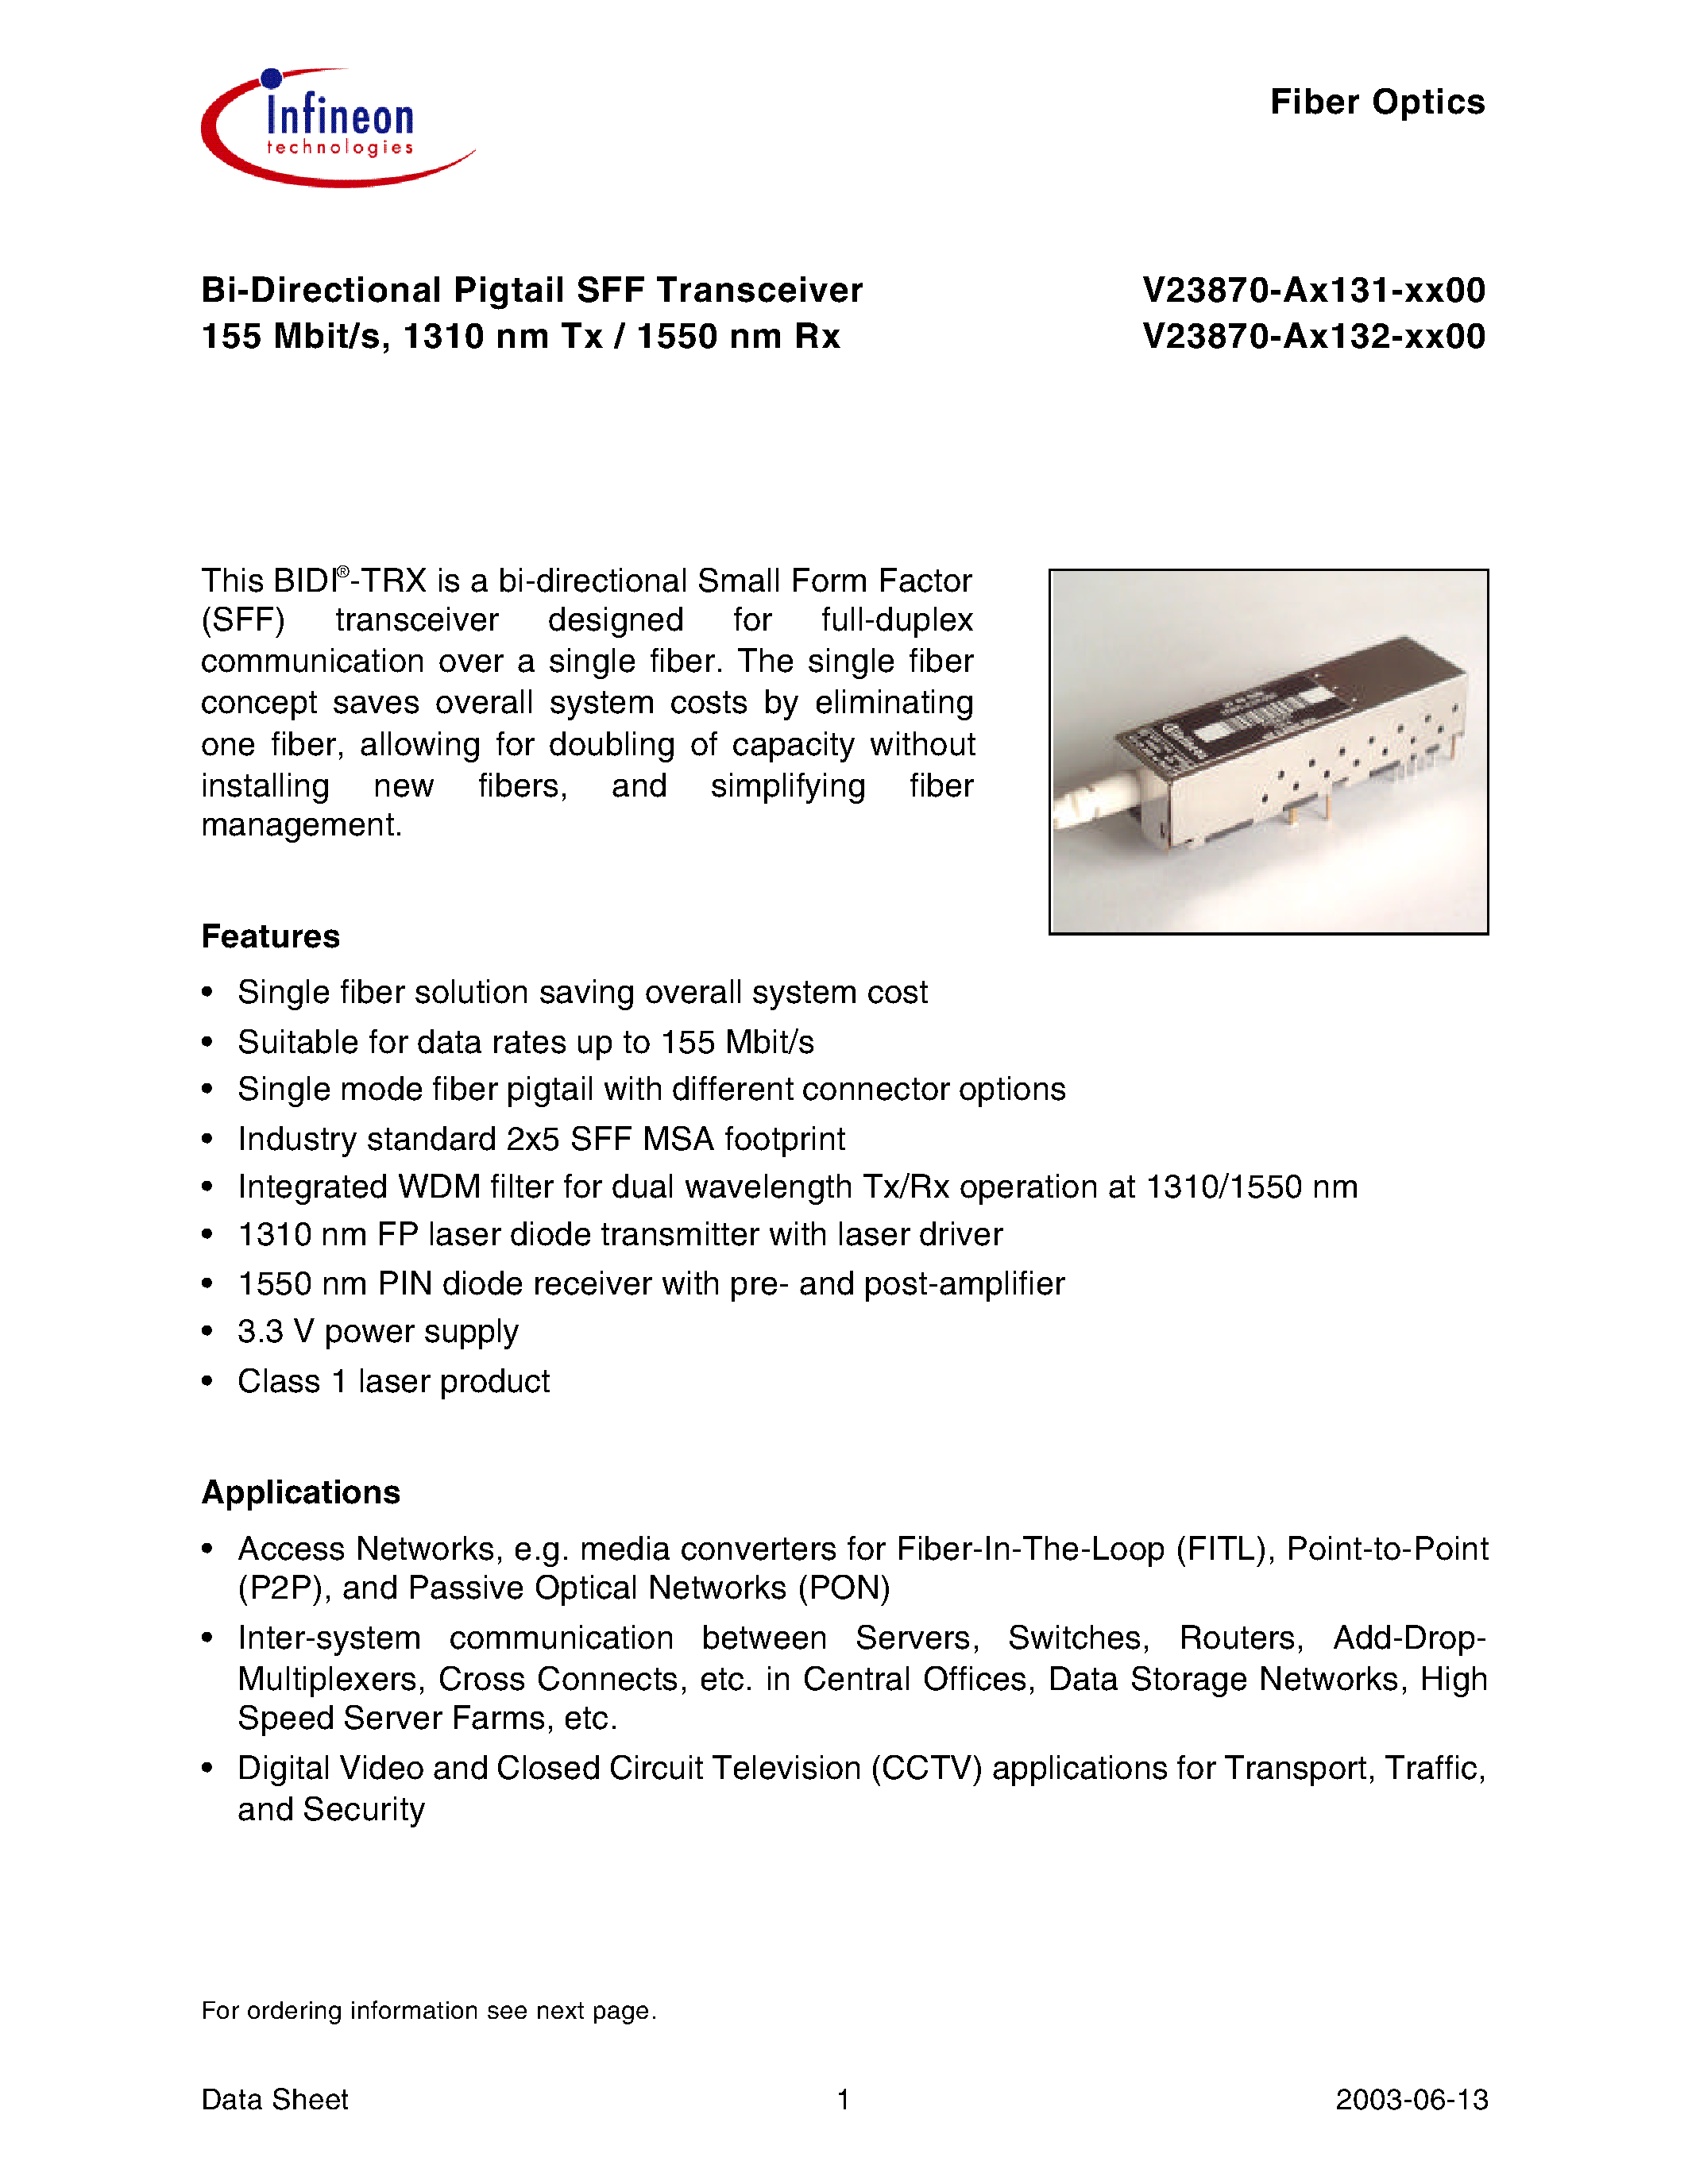 Даташит V23870-A3132-H100 - Bi-Directional Pigtail SFF Transceiver 155 Mbit/s/ 1310 nm Tx / 1550 nm Rx страница 1